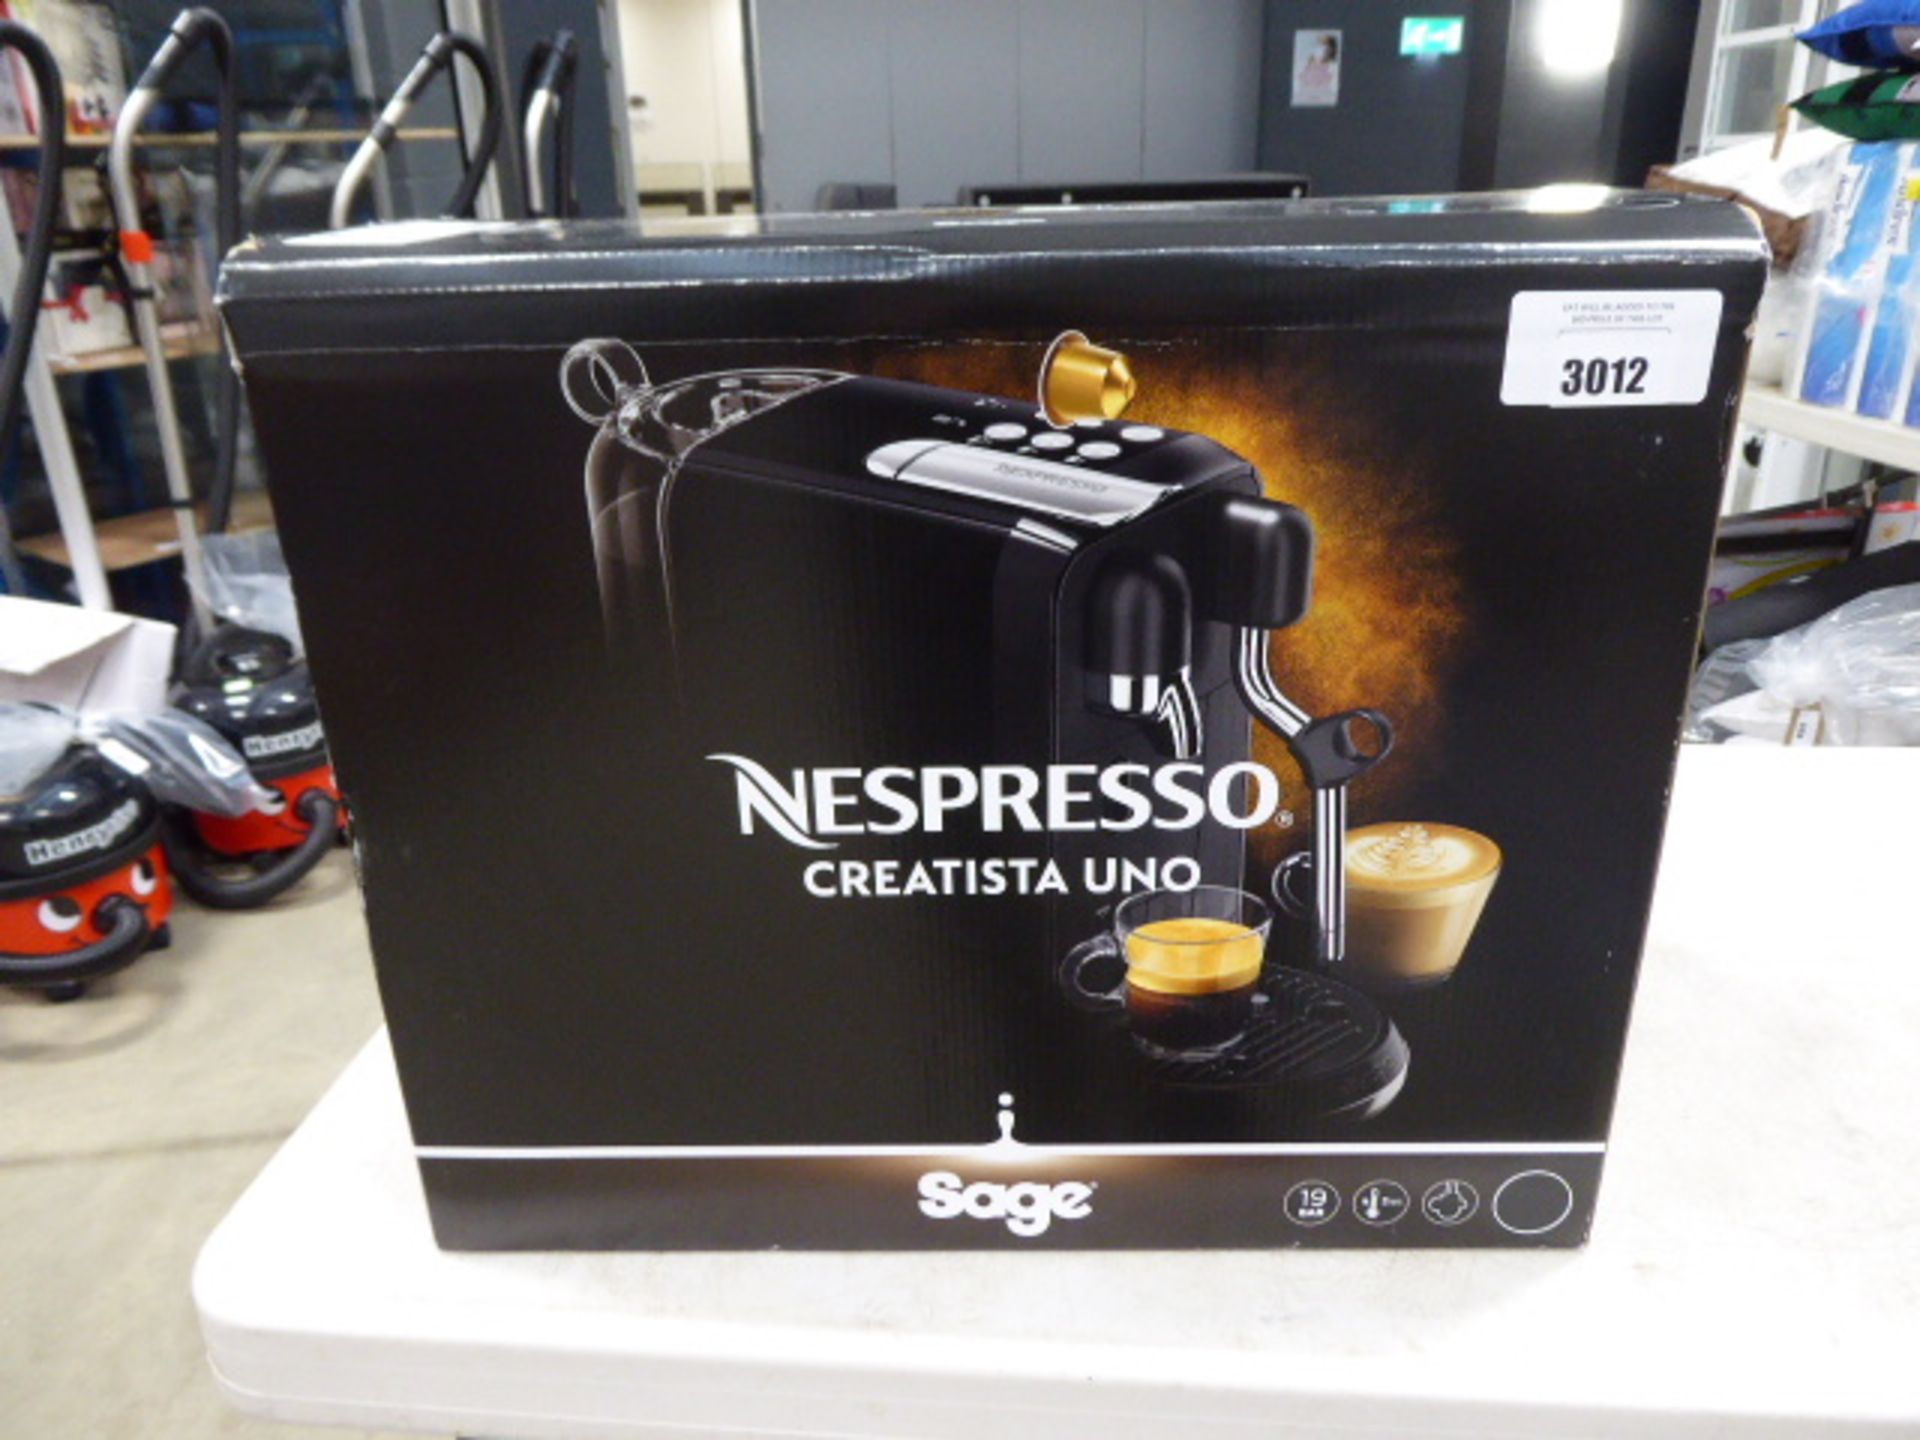 Sage Nexpresso coffee machine plus a box of Nexpresso coffee pods